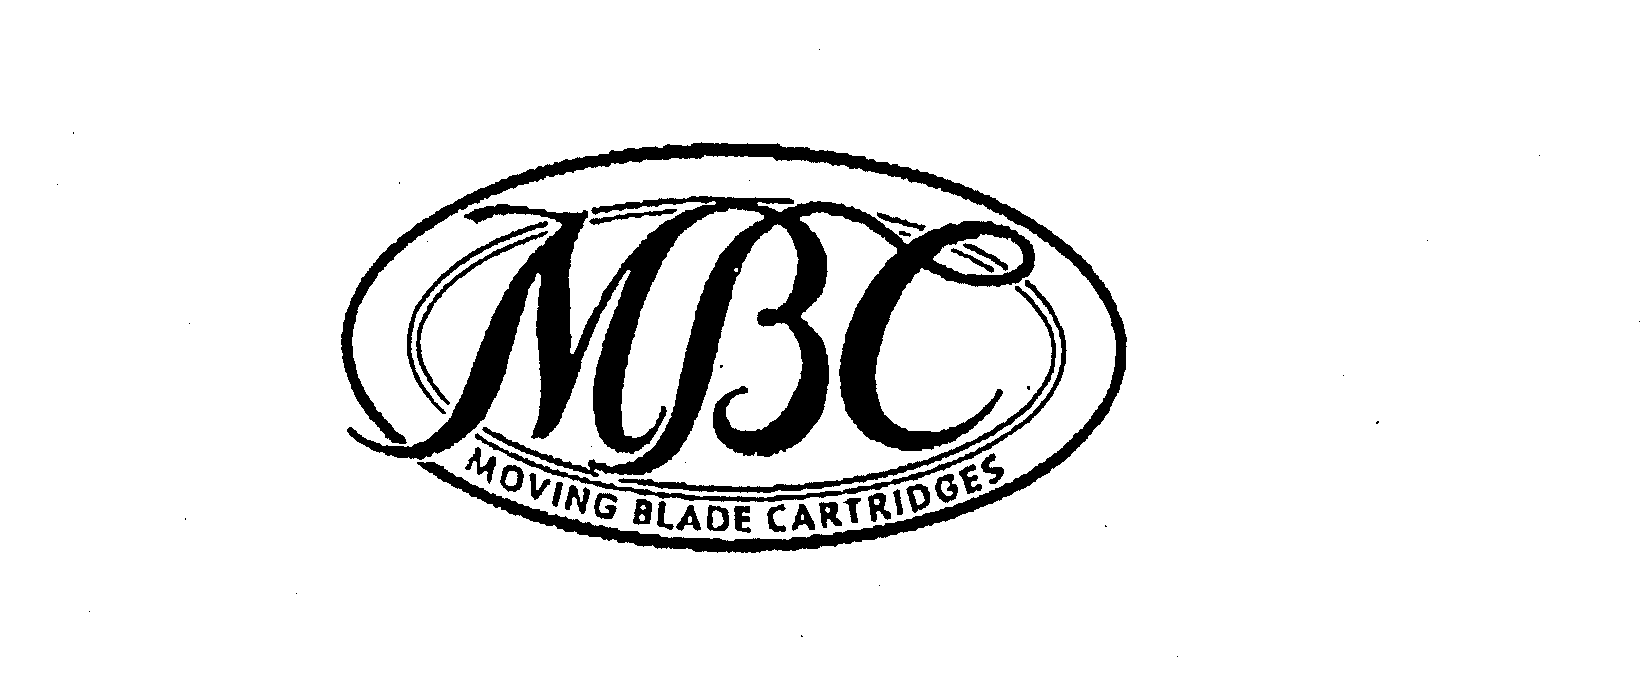  MBC MOVING BLADE CARTRIDGES